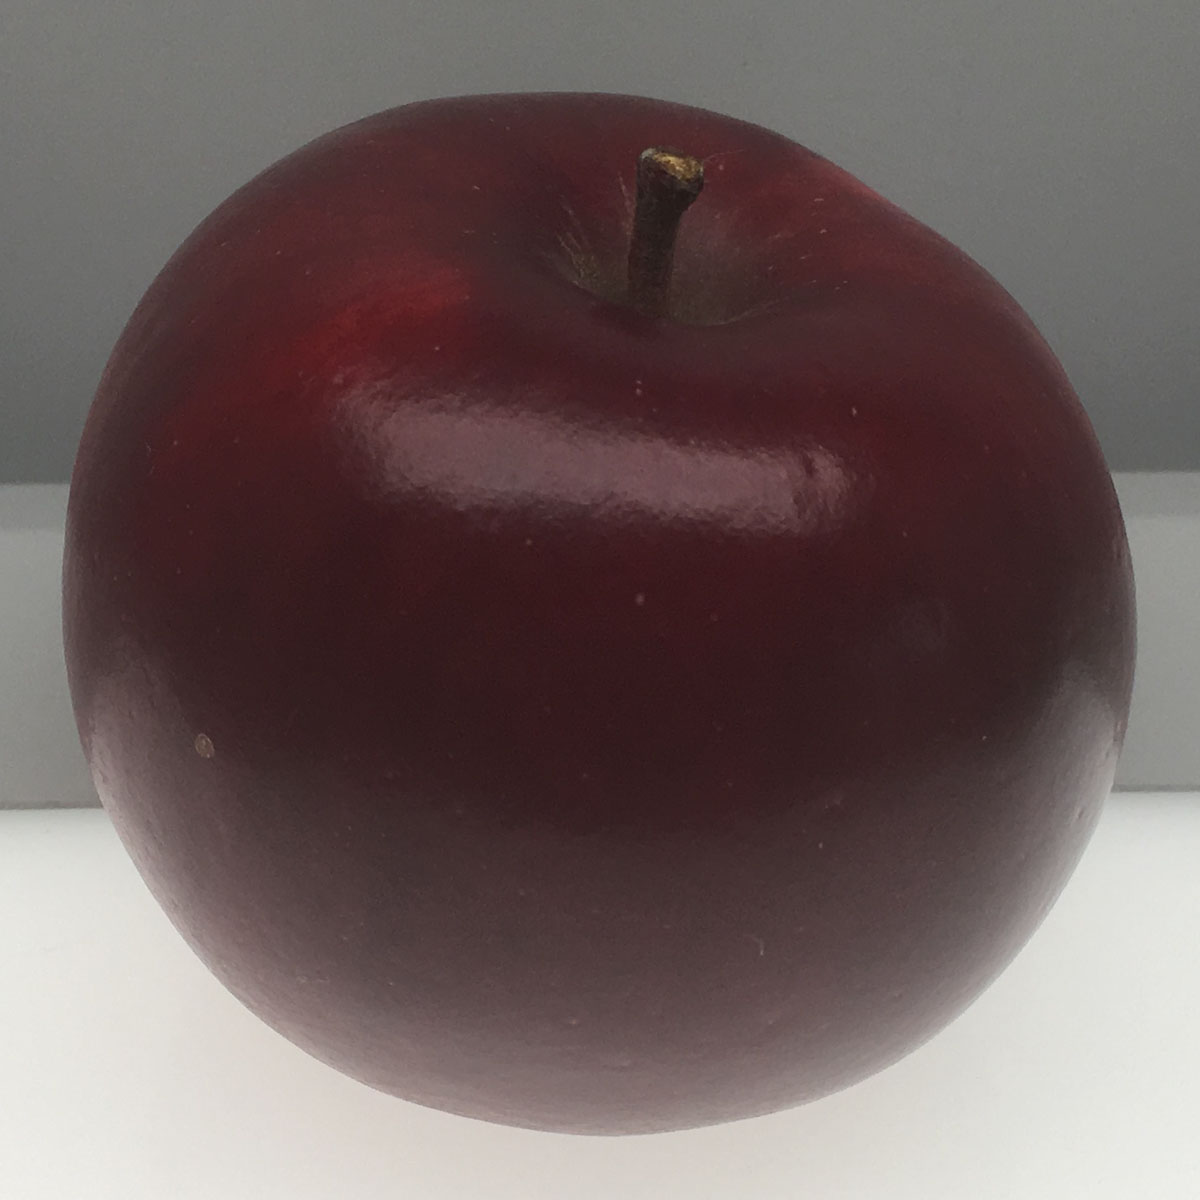 Gernes Red Acre apple